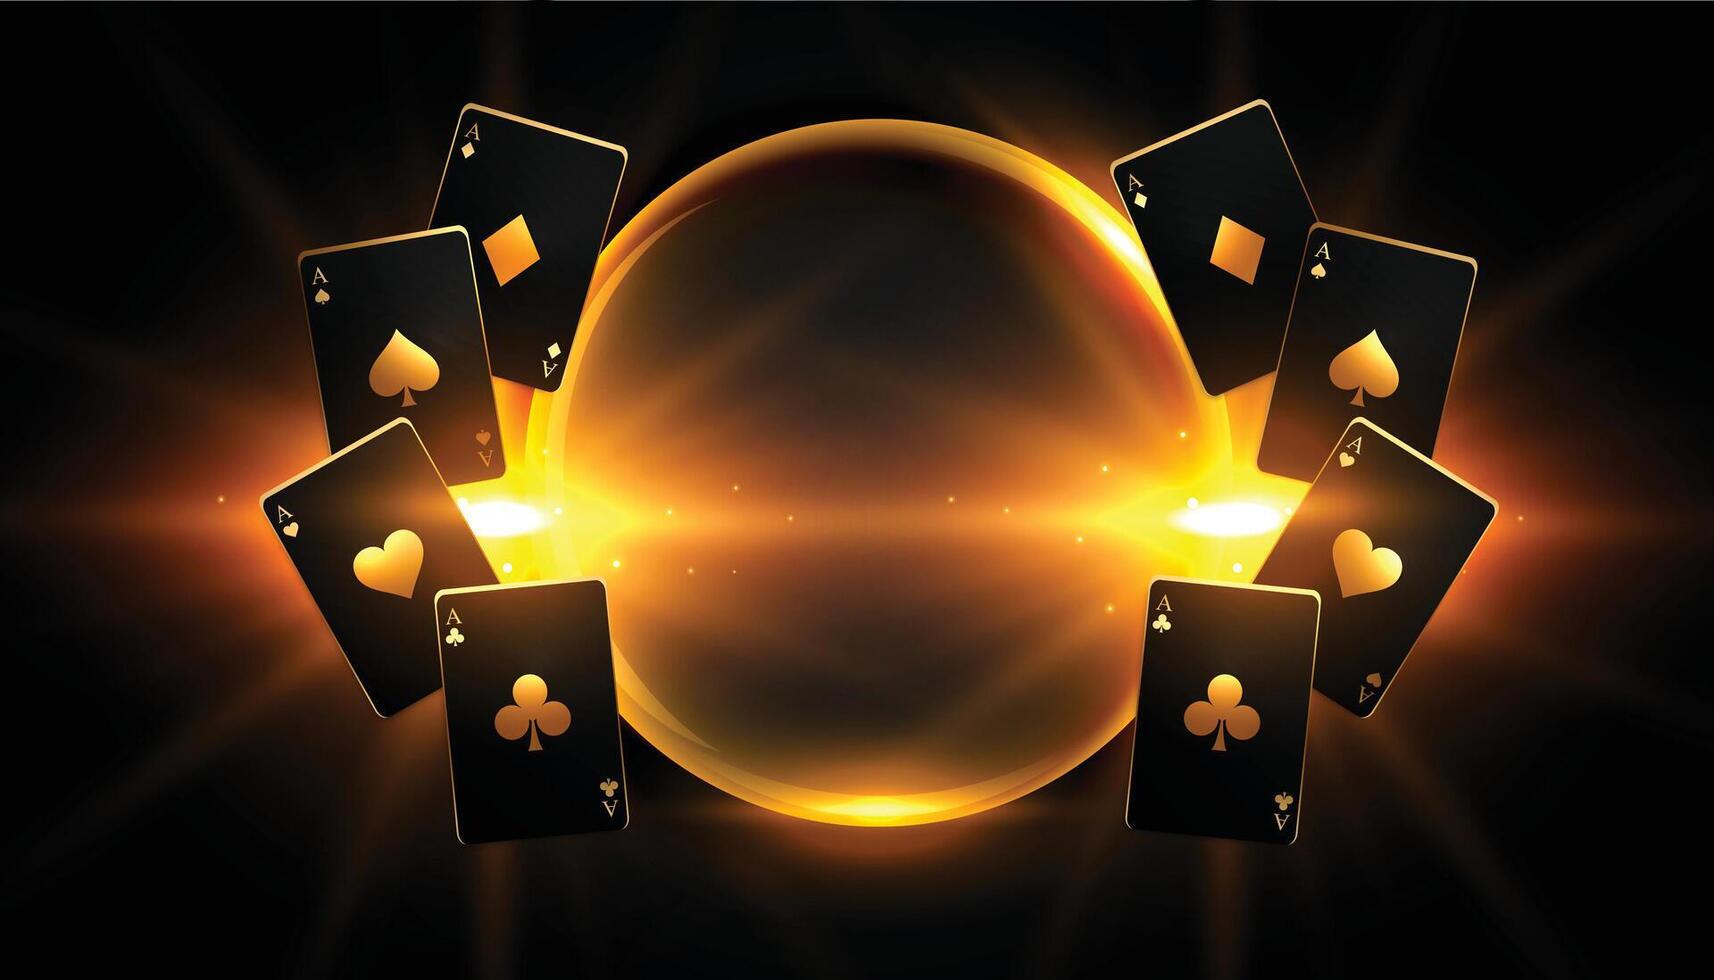 donker zwart poker aas kaart banier met glimmend licht effect vector